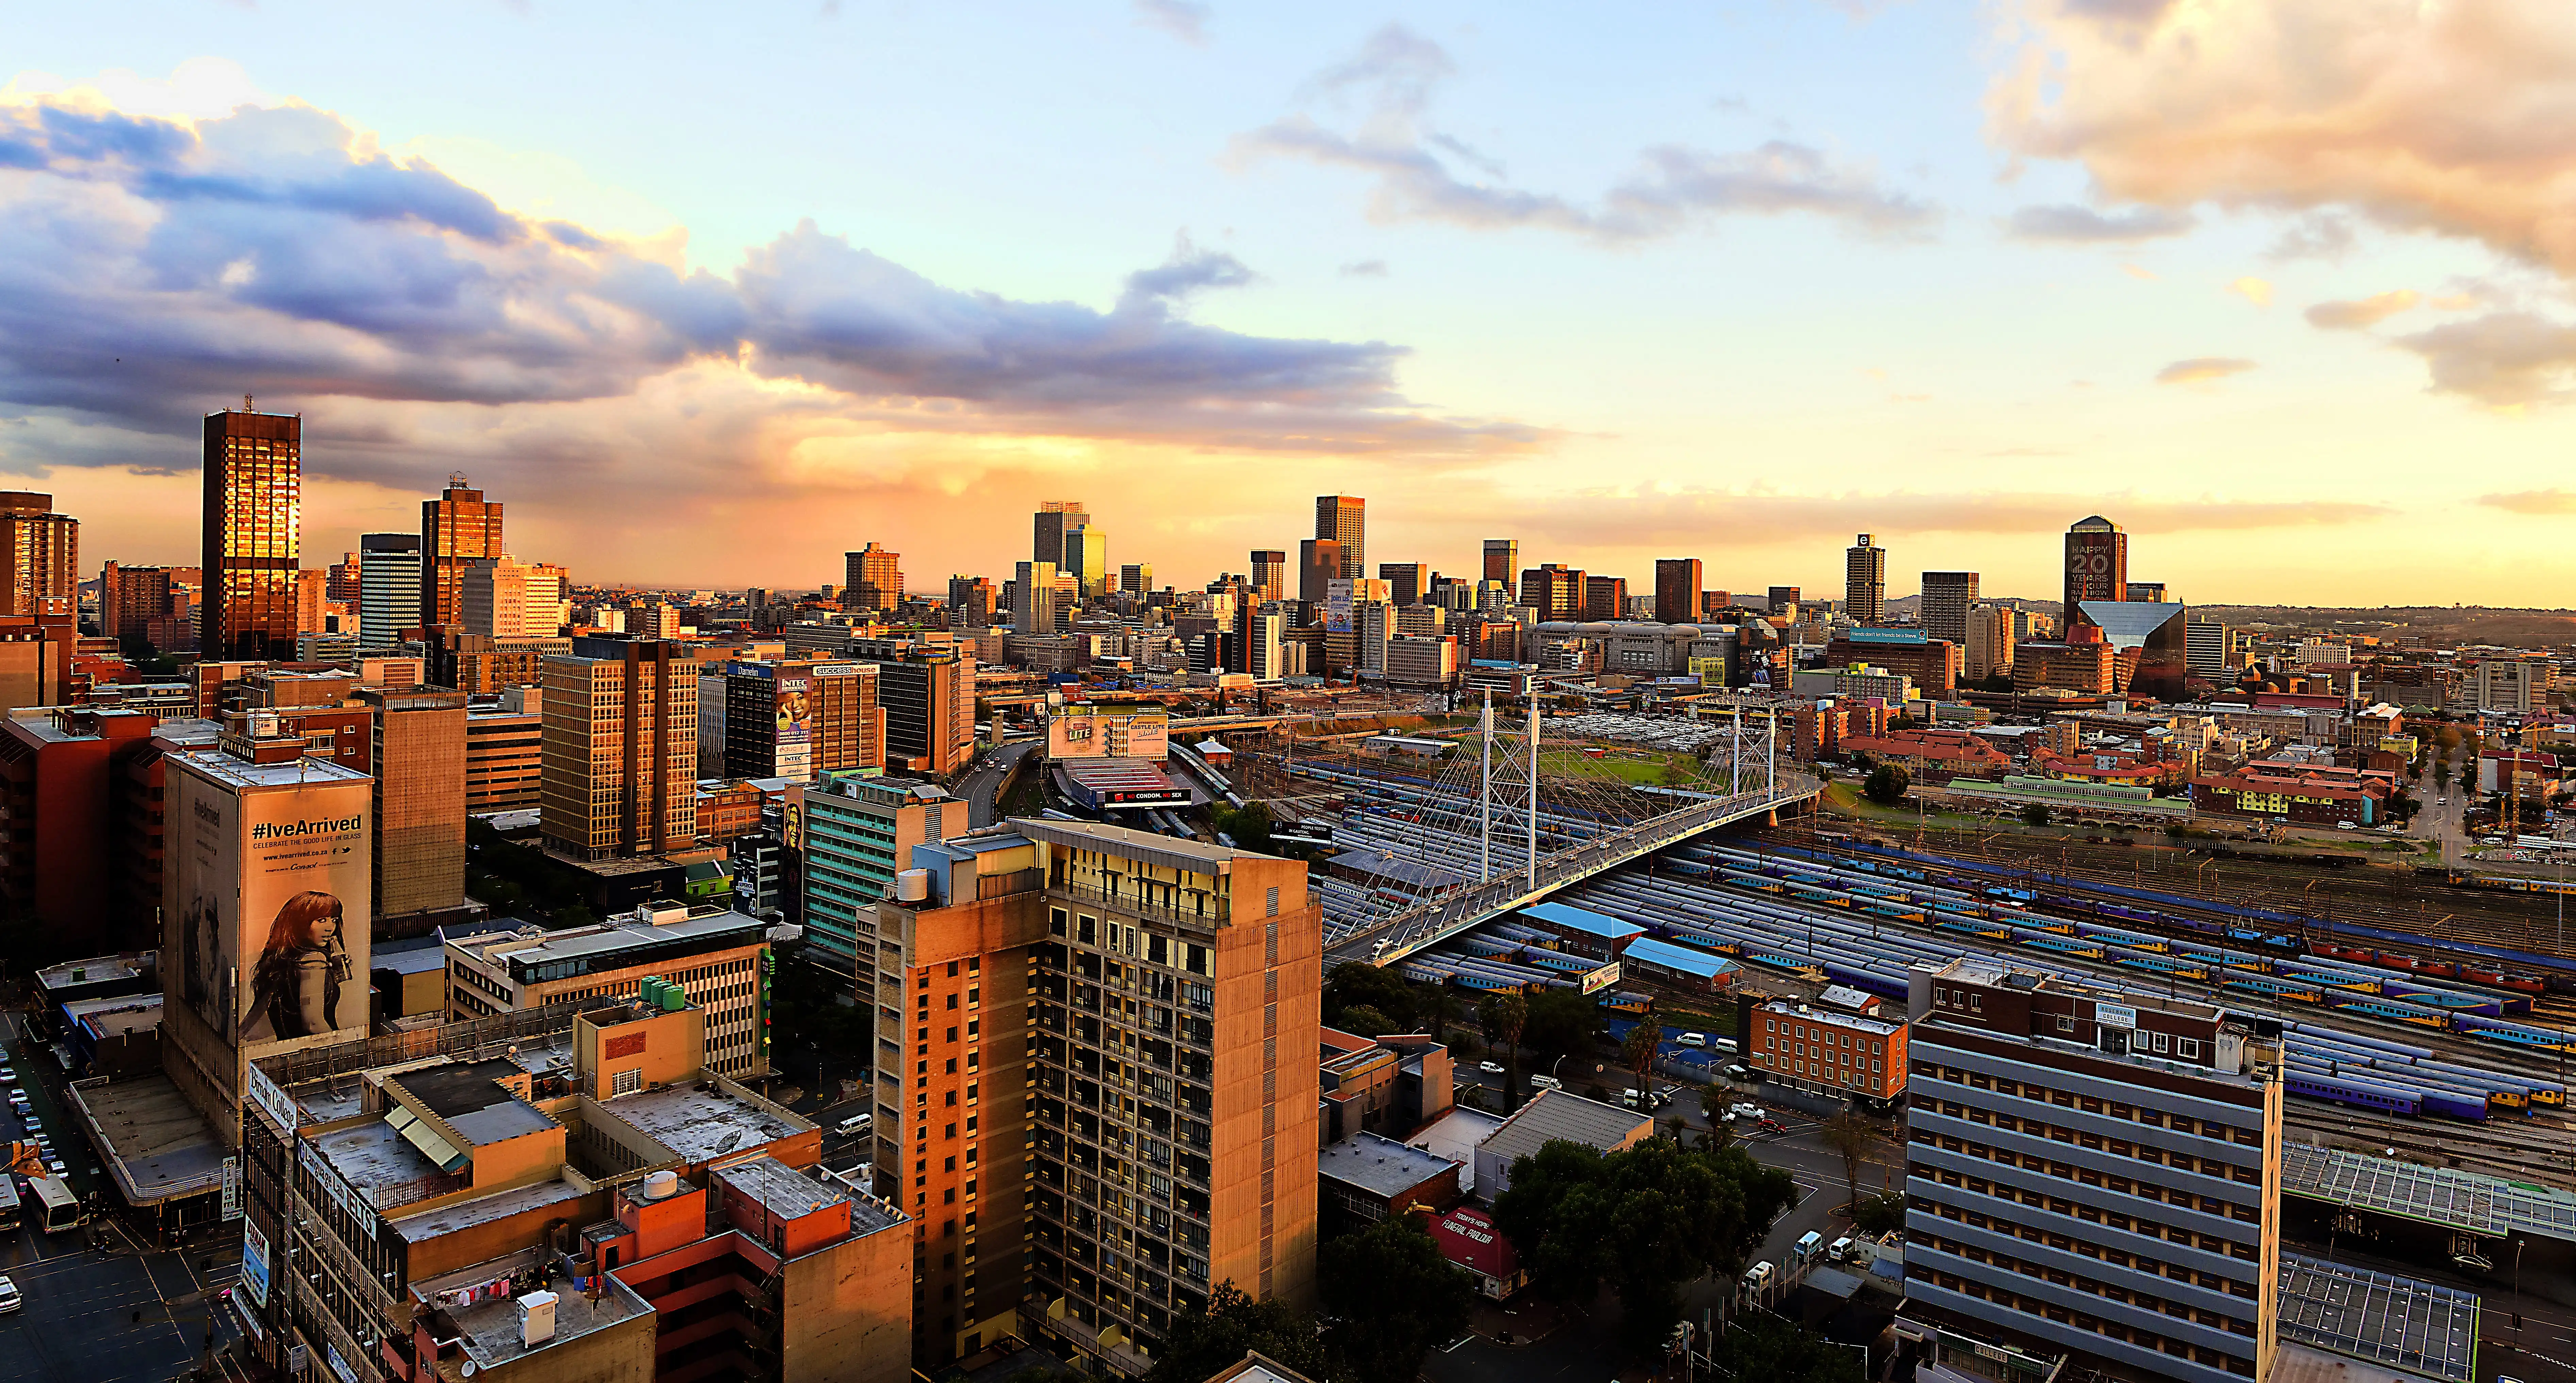 Johannesburg tourism